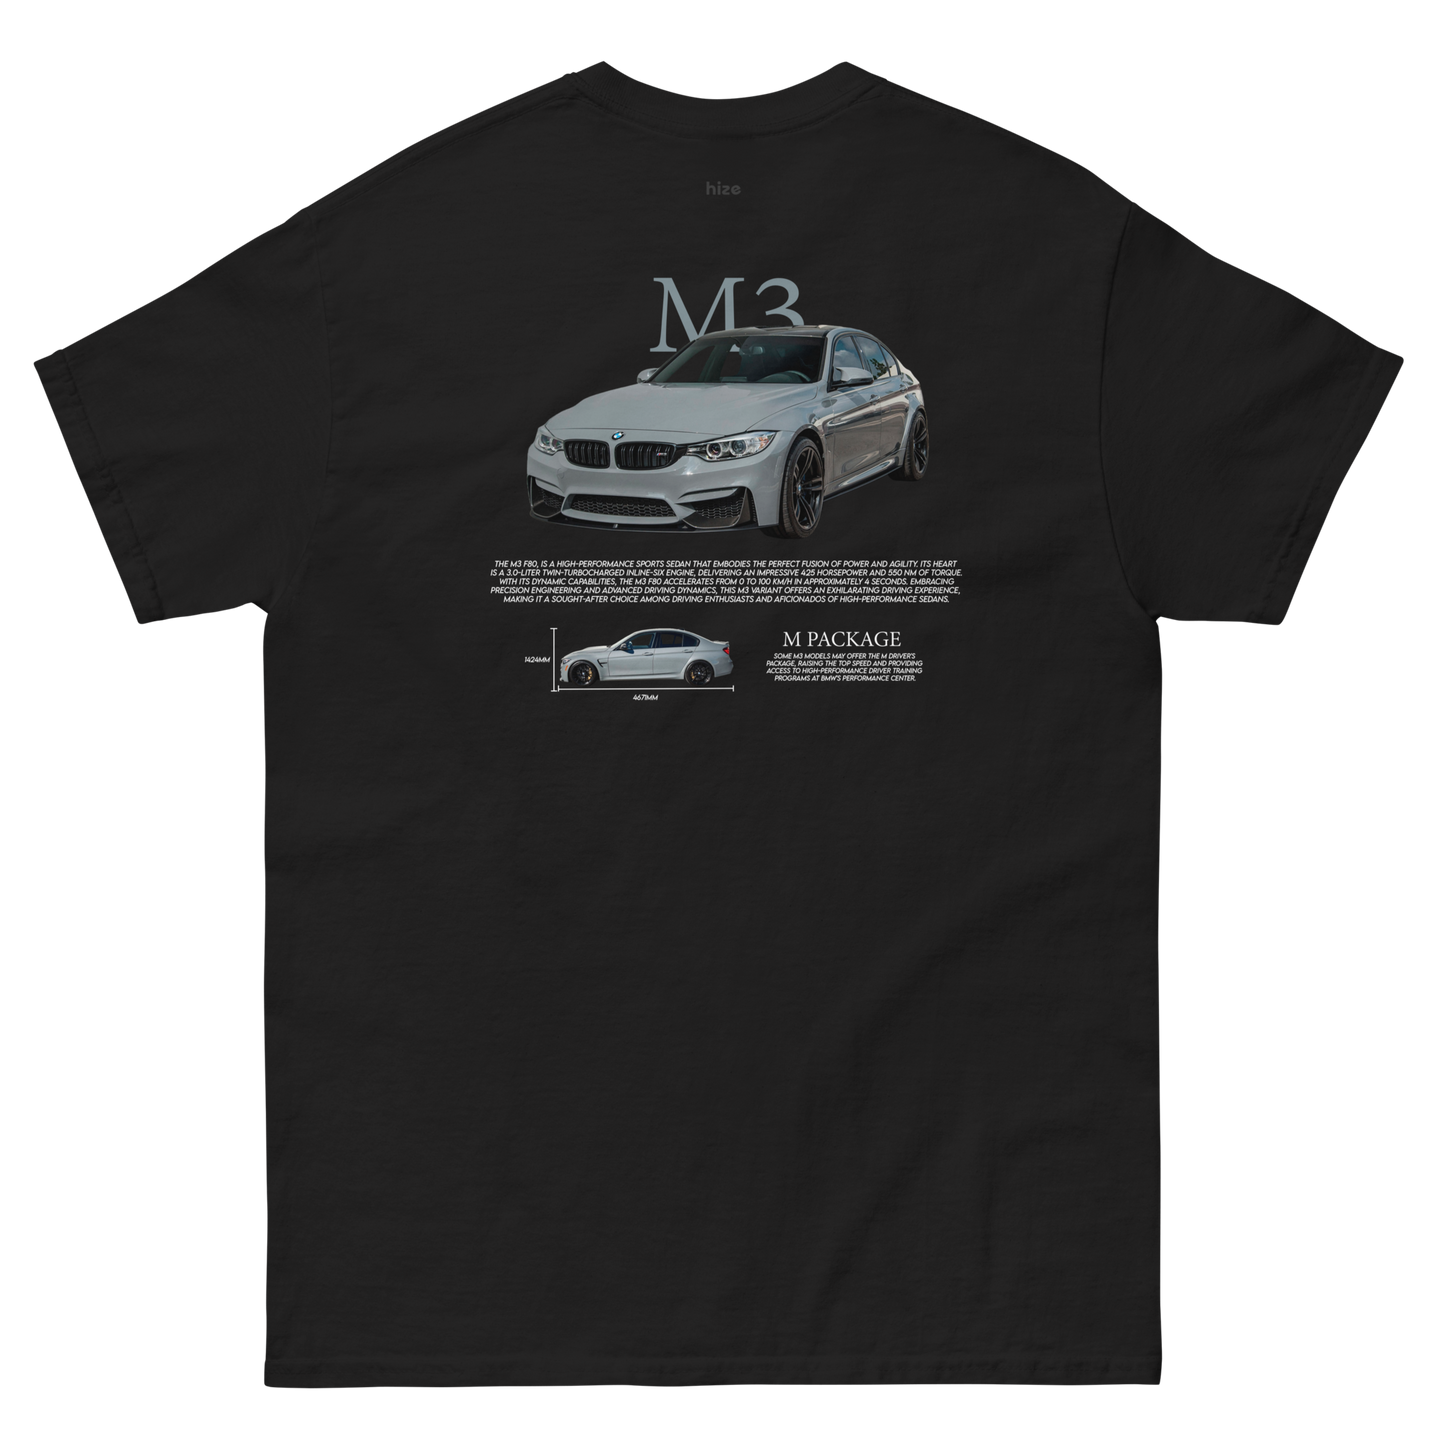 BMW M3 T-shirt - Black Back